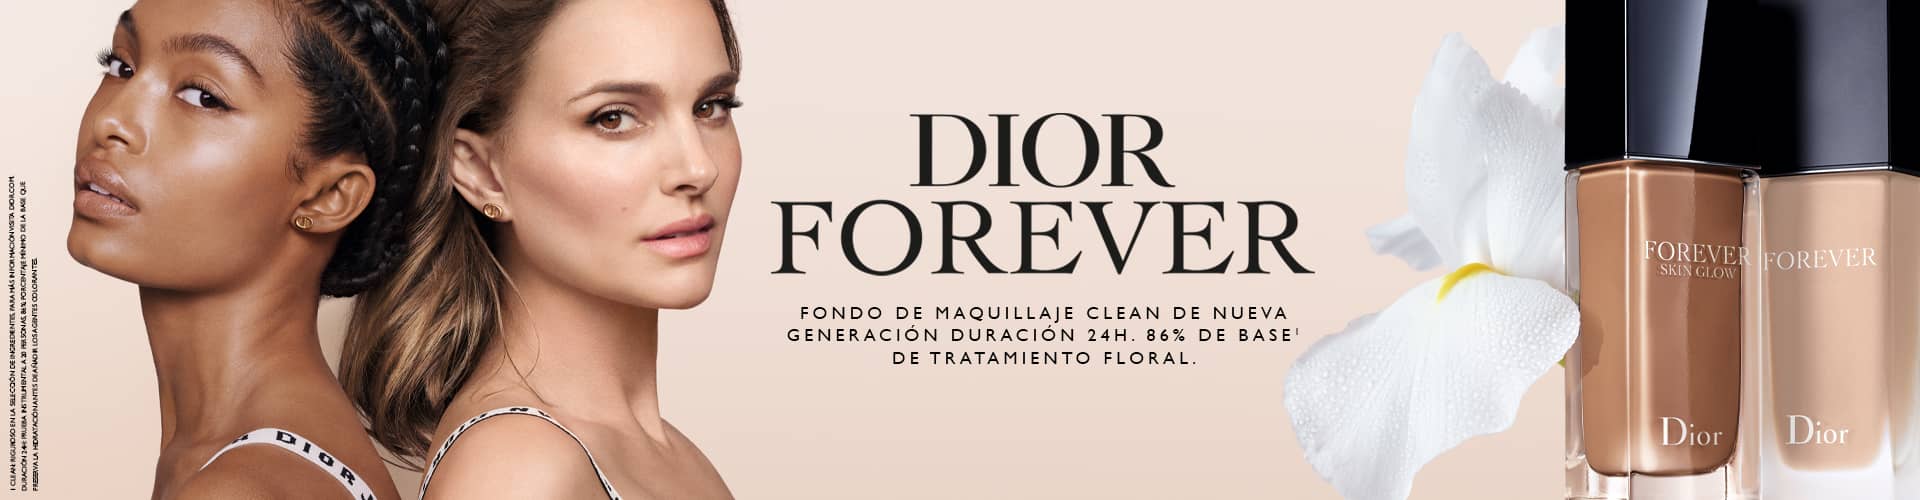 DIOR Forever | Nuevo Fondo de Maquillaje | Prieto.es